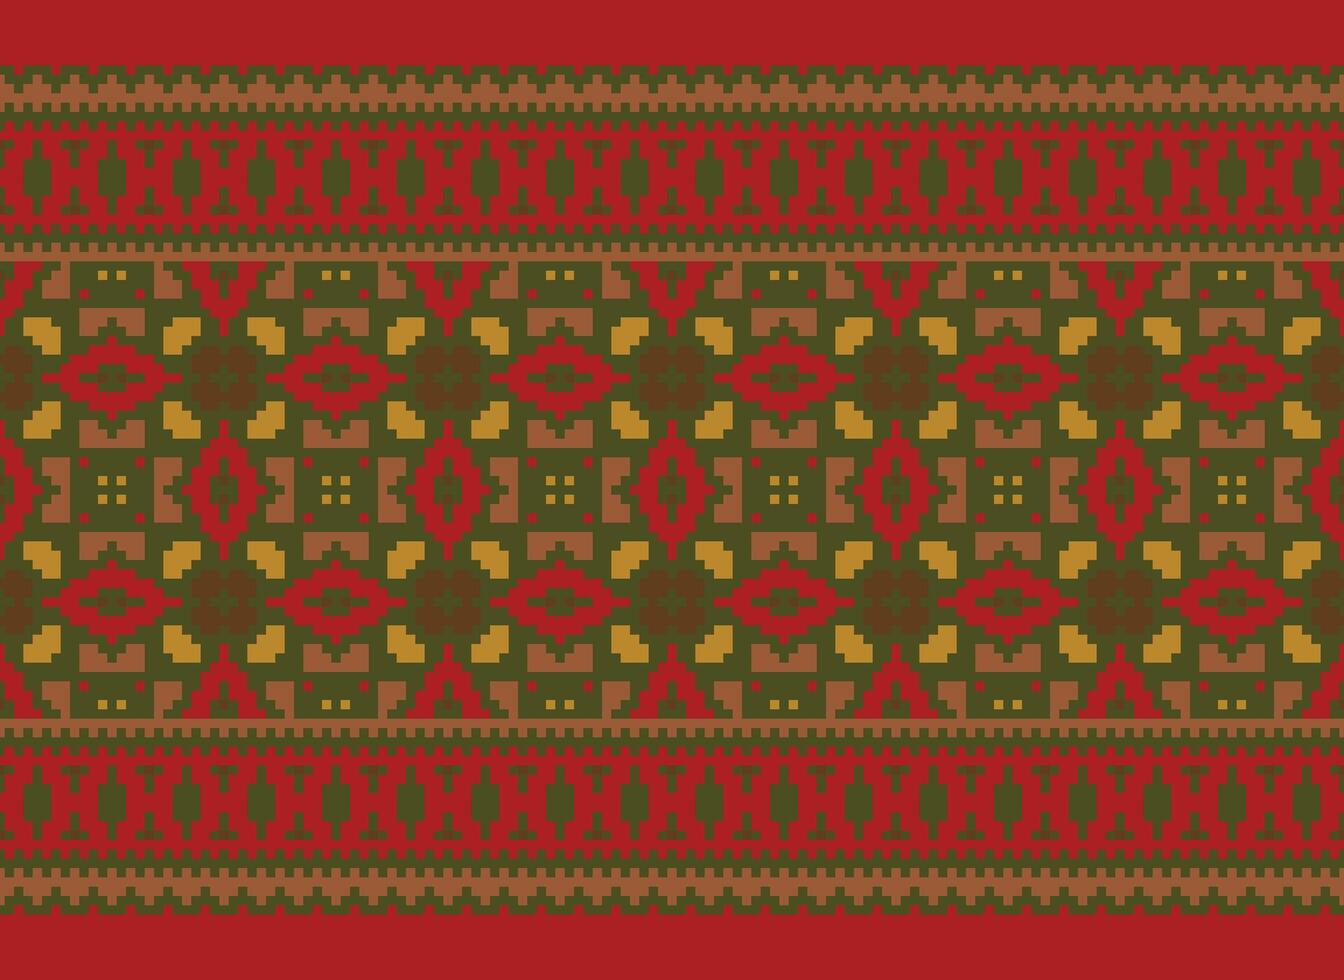 de punto étnico patrón, vector cruzar puntada oriental fondo, bordado retro jacquard estilo, púrpura modelo cuadrado nativo, diseño para textil, tela, alfombra, alfombra, fibras